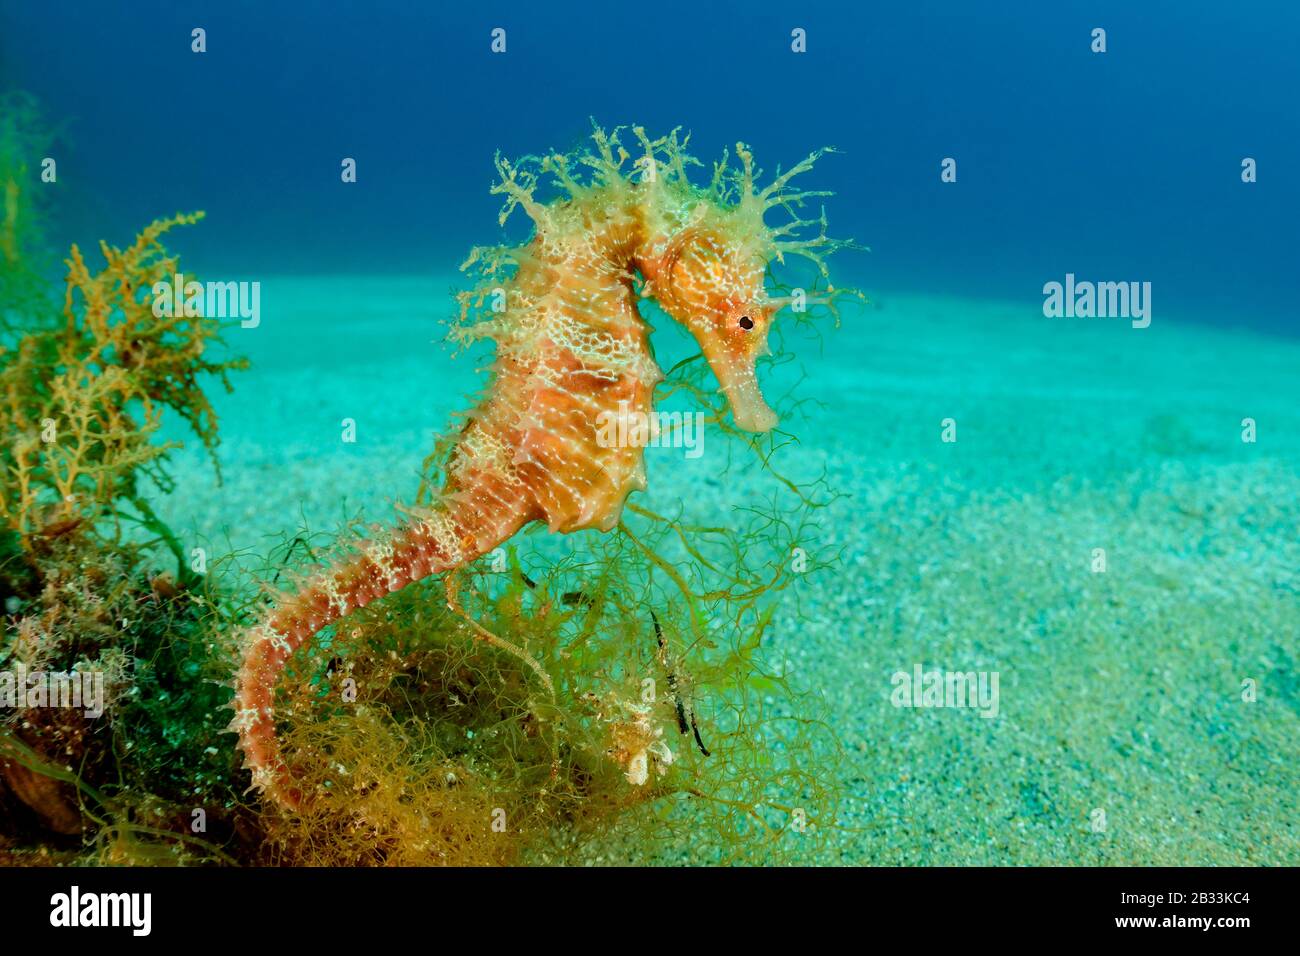 Cavalluccio marino a lungo snouted, Hippocampus guttulatus, Tamariu, Costa Brava, Spagna, Mar Mediterraneo Foto Stock